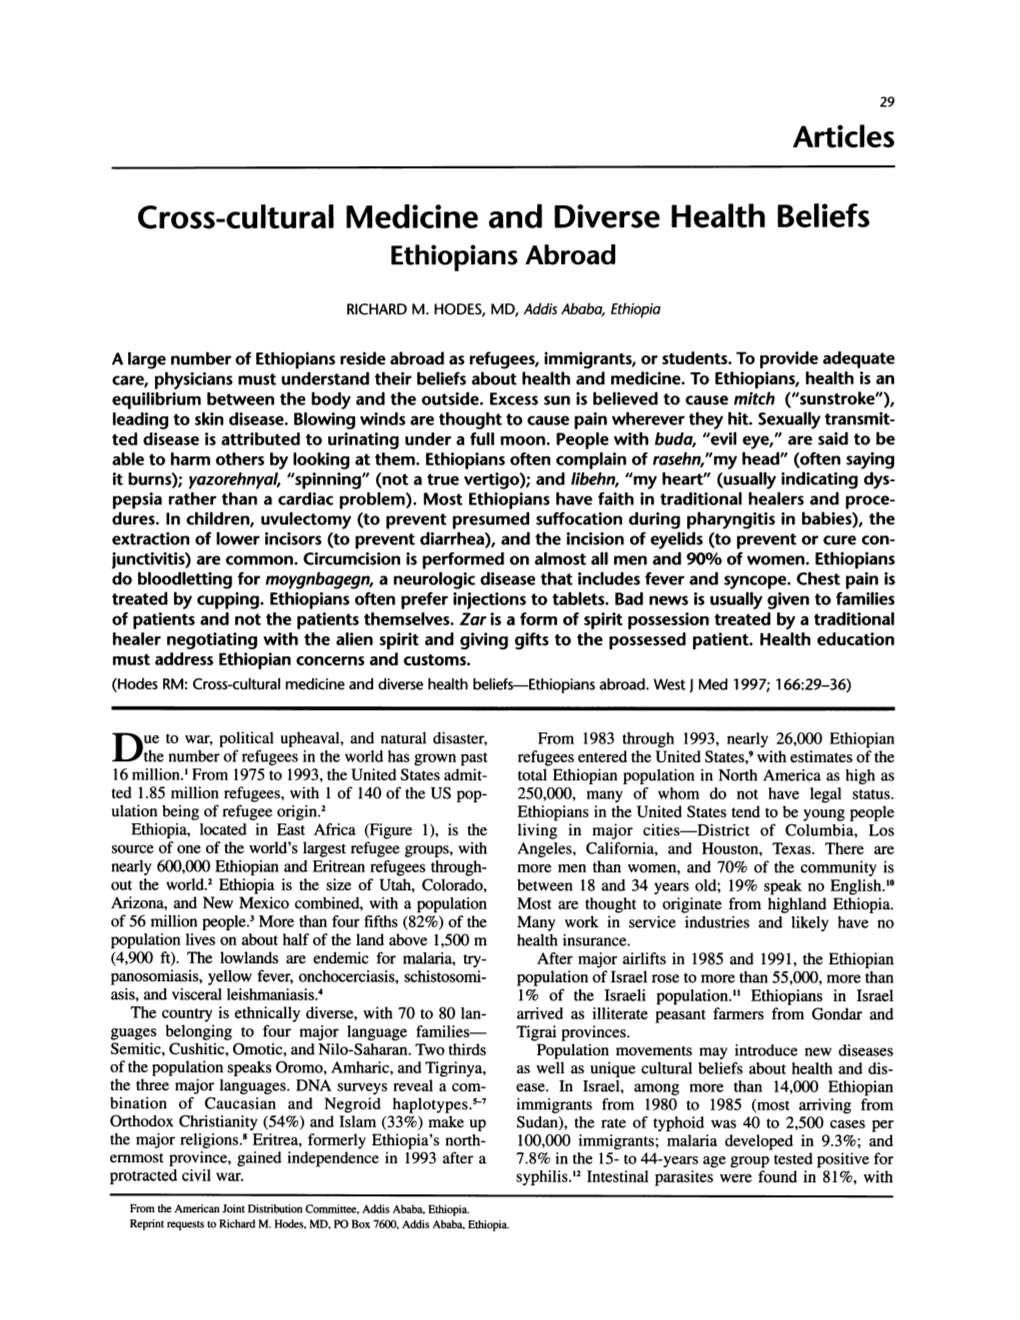 Cross-Cultural Medicine and Diverse Health Beliefs-Ethiopians Abroad